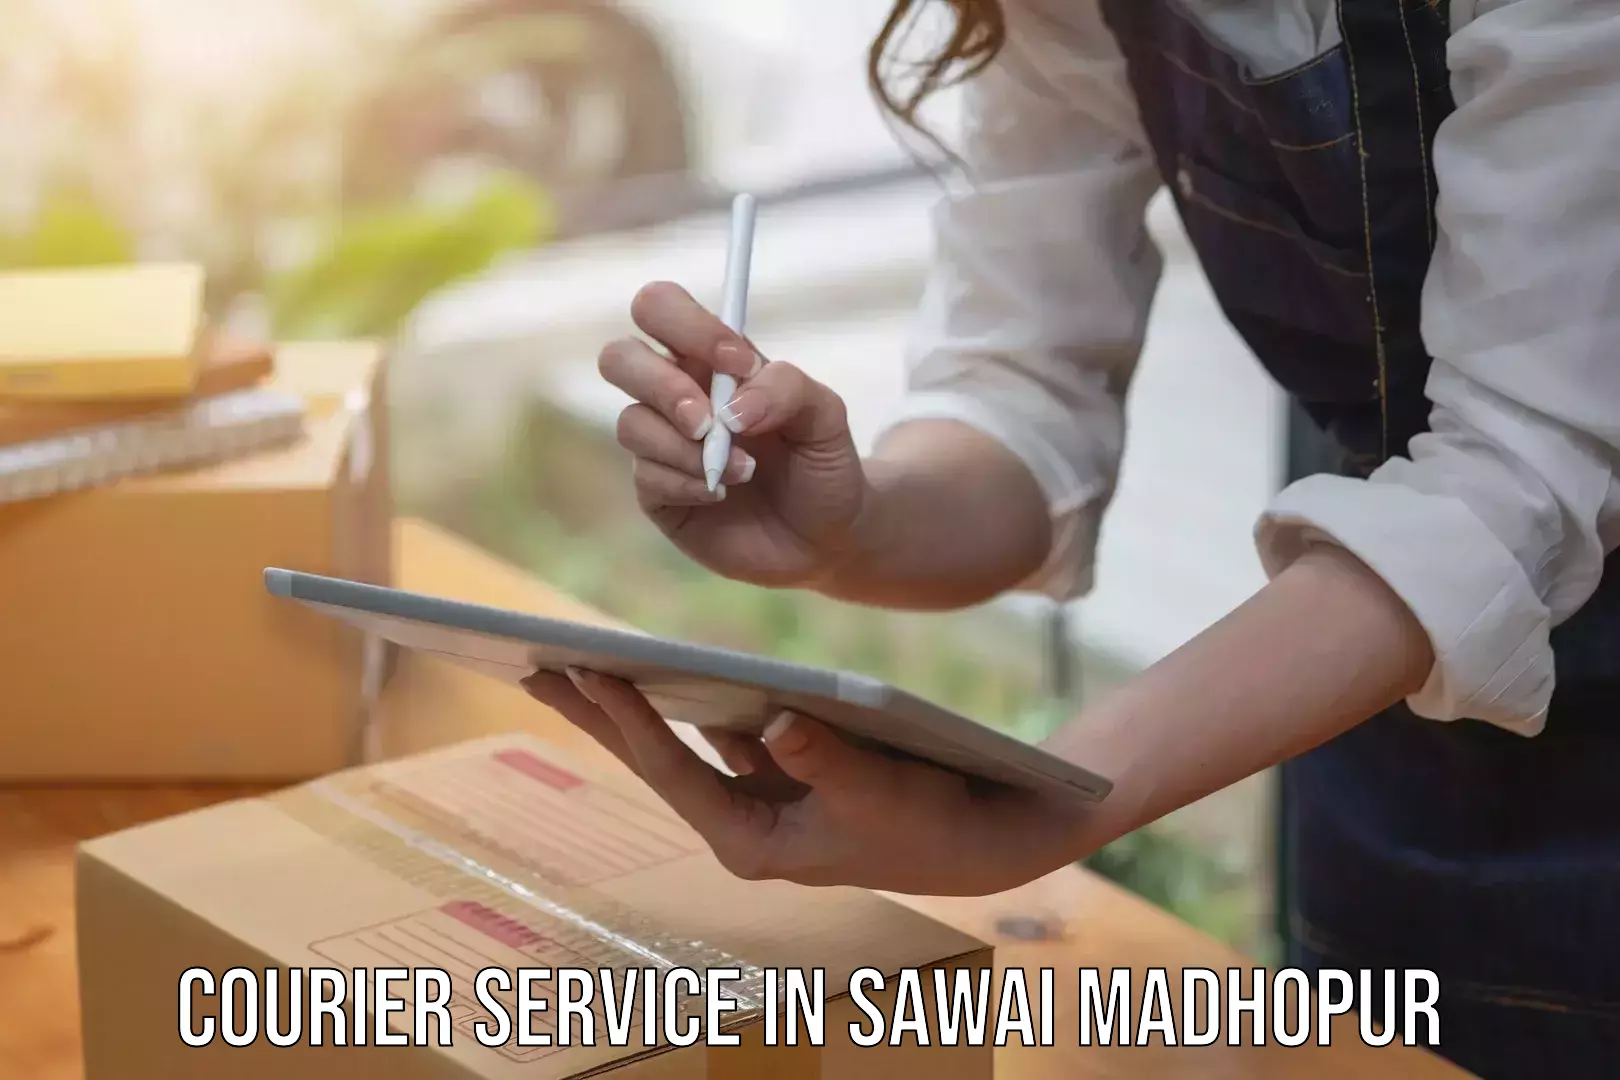 24/7 courier service in Sawai Madhopur